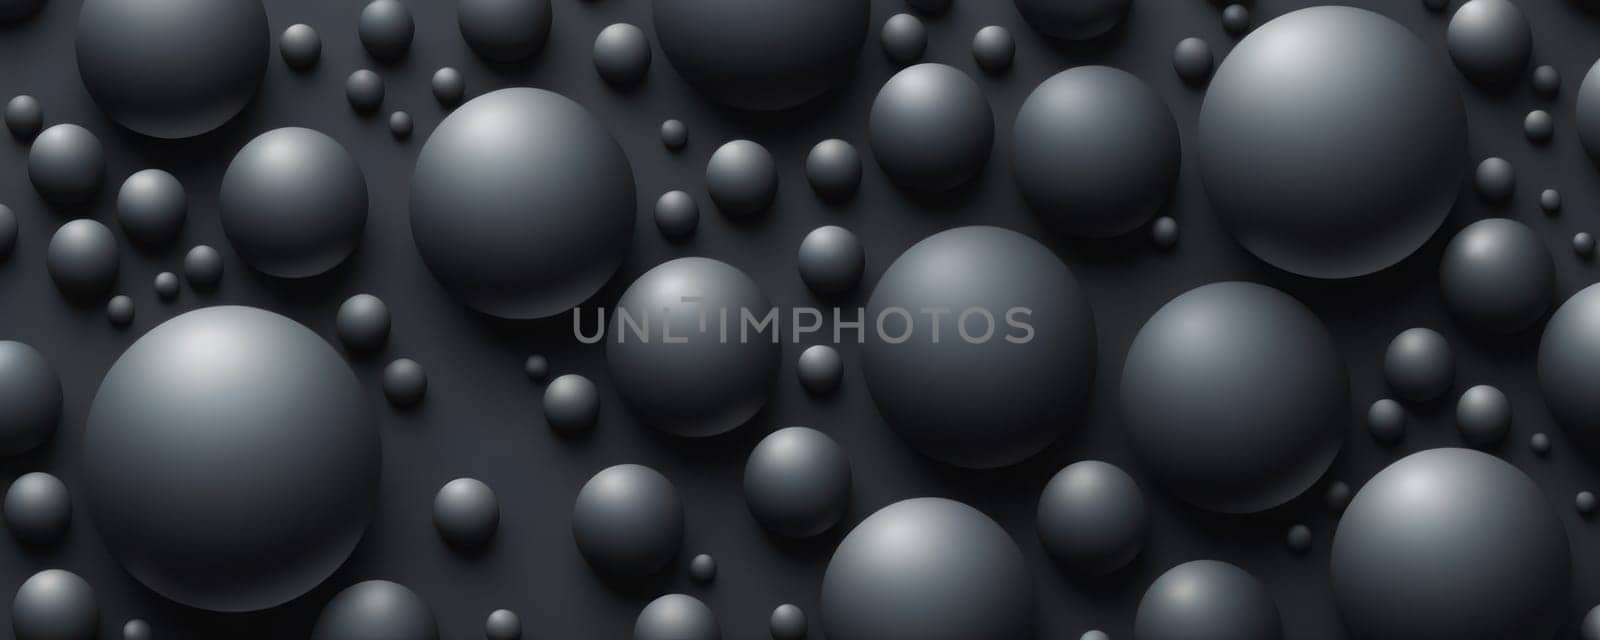 Globular Shapes in Black Dimgrey by nkotlyar